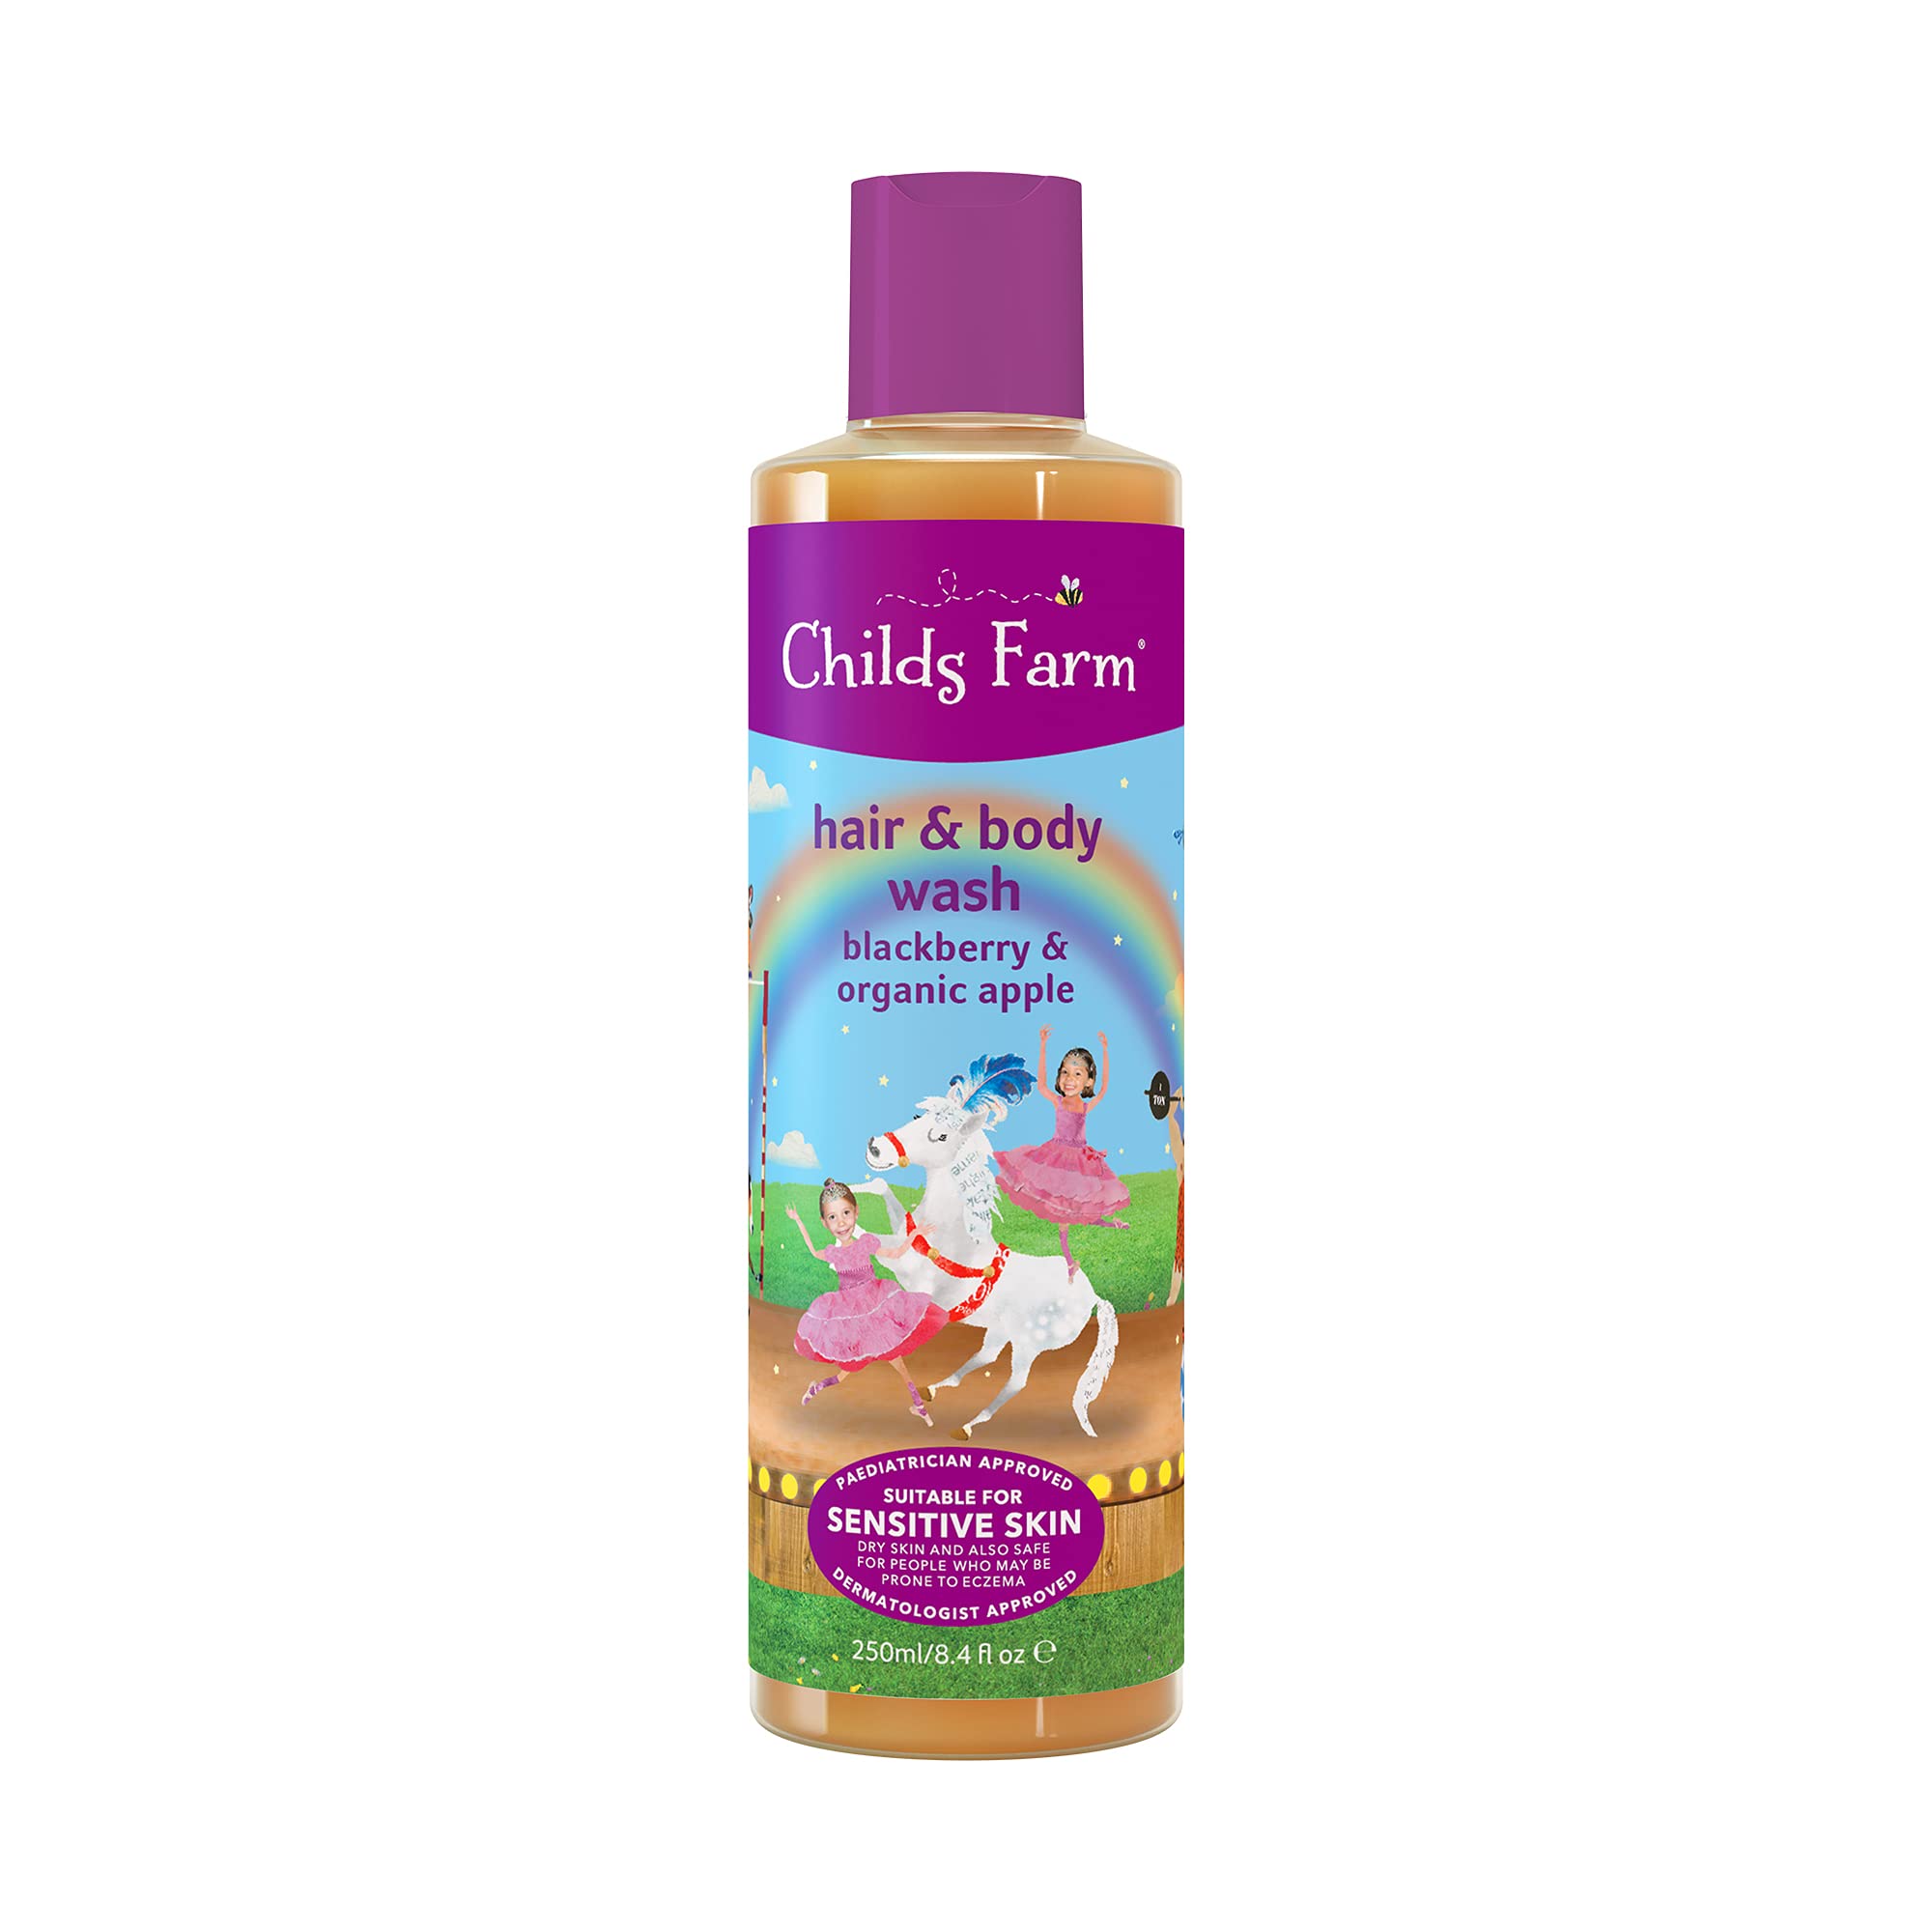 Childs Farm Blackberry & Organic Apple Hair & Body Wash, 250ml